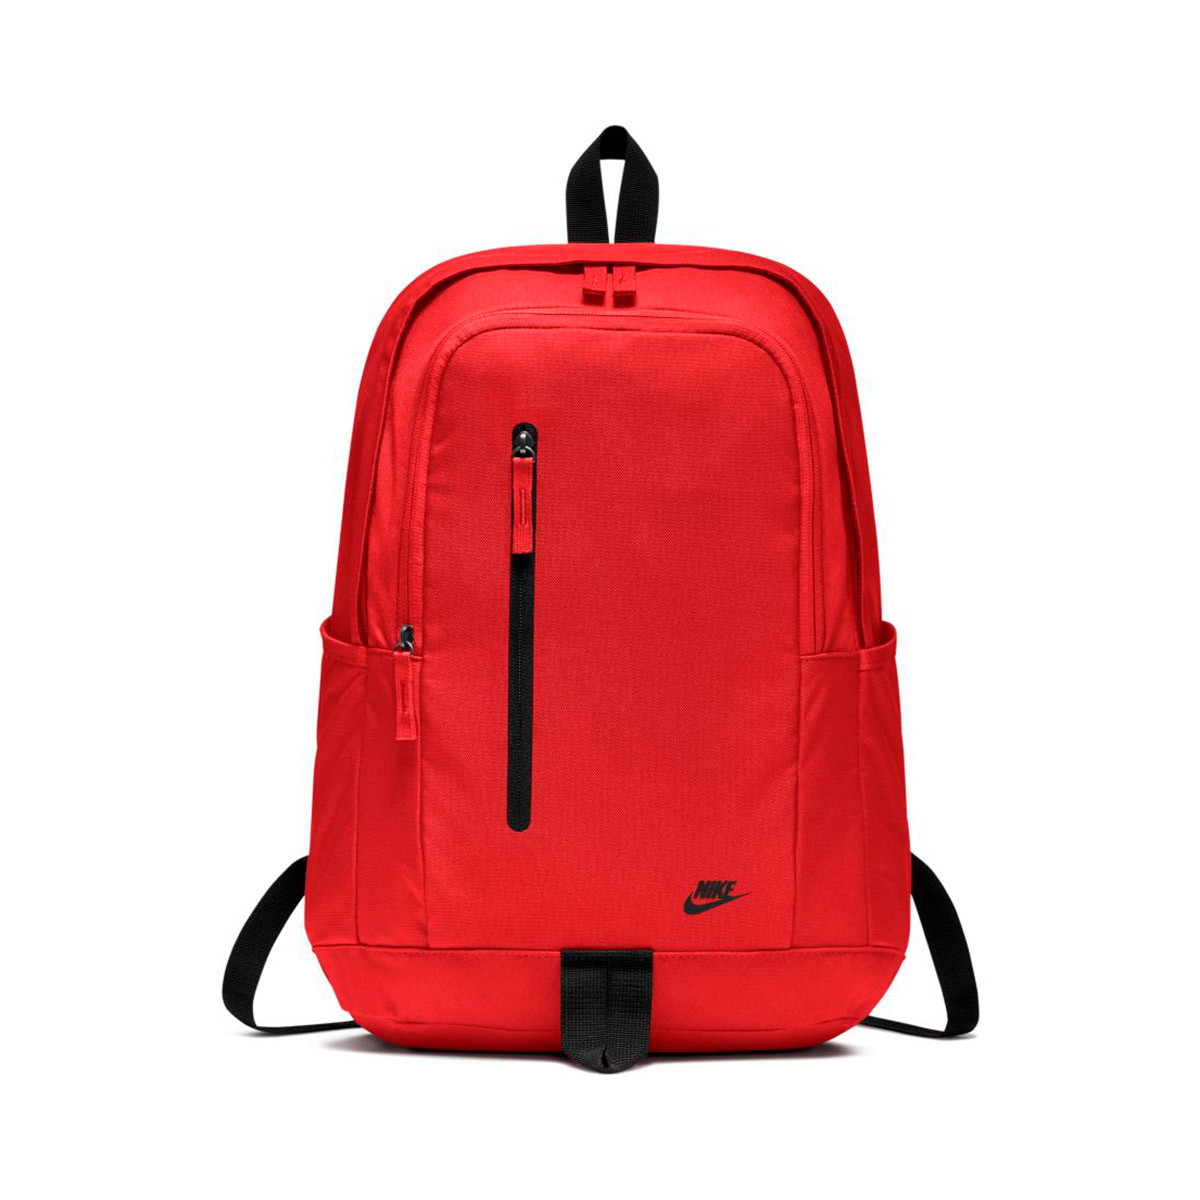 nike red and black backpack